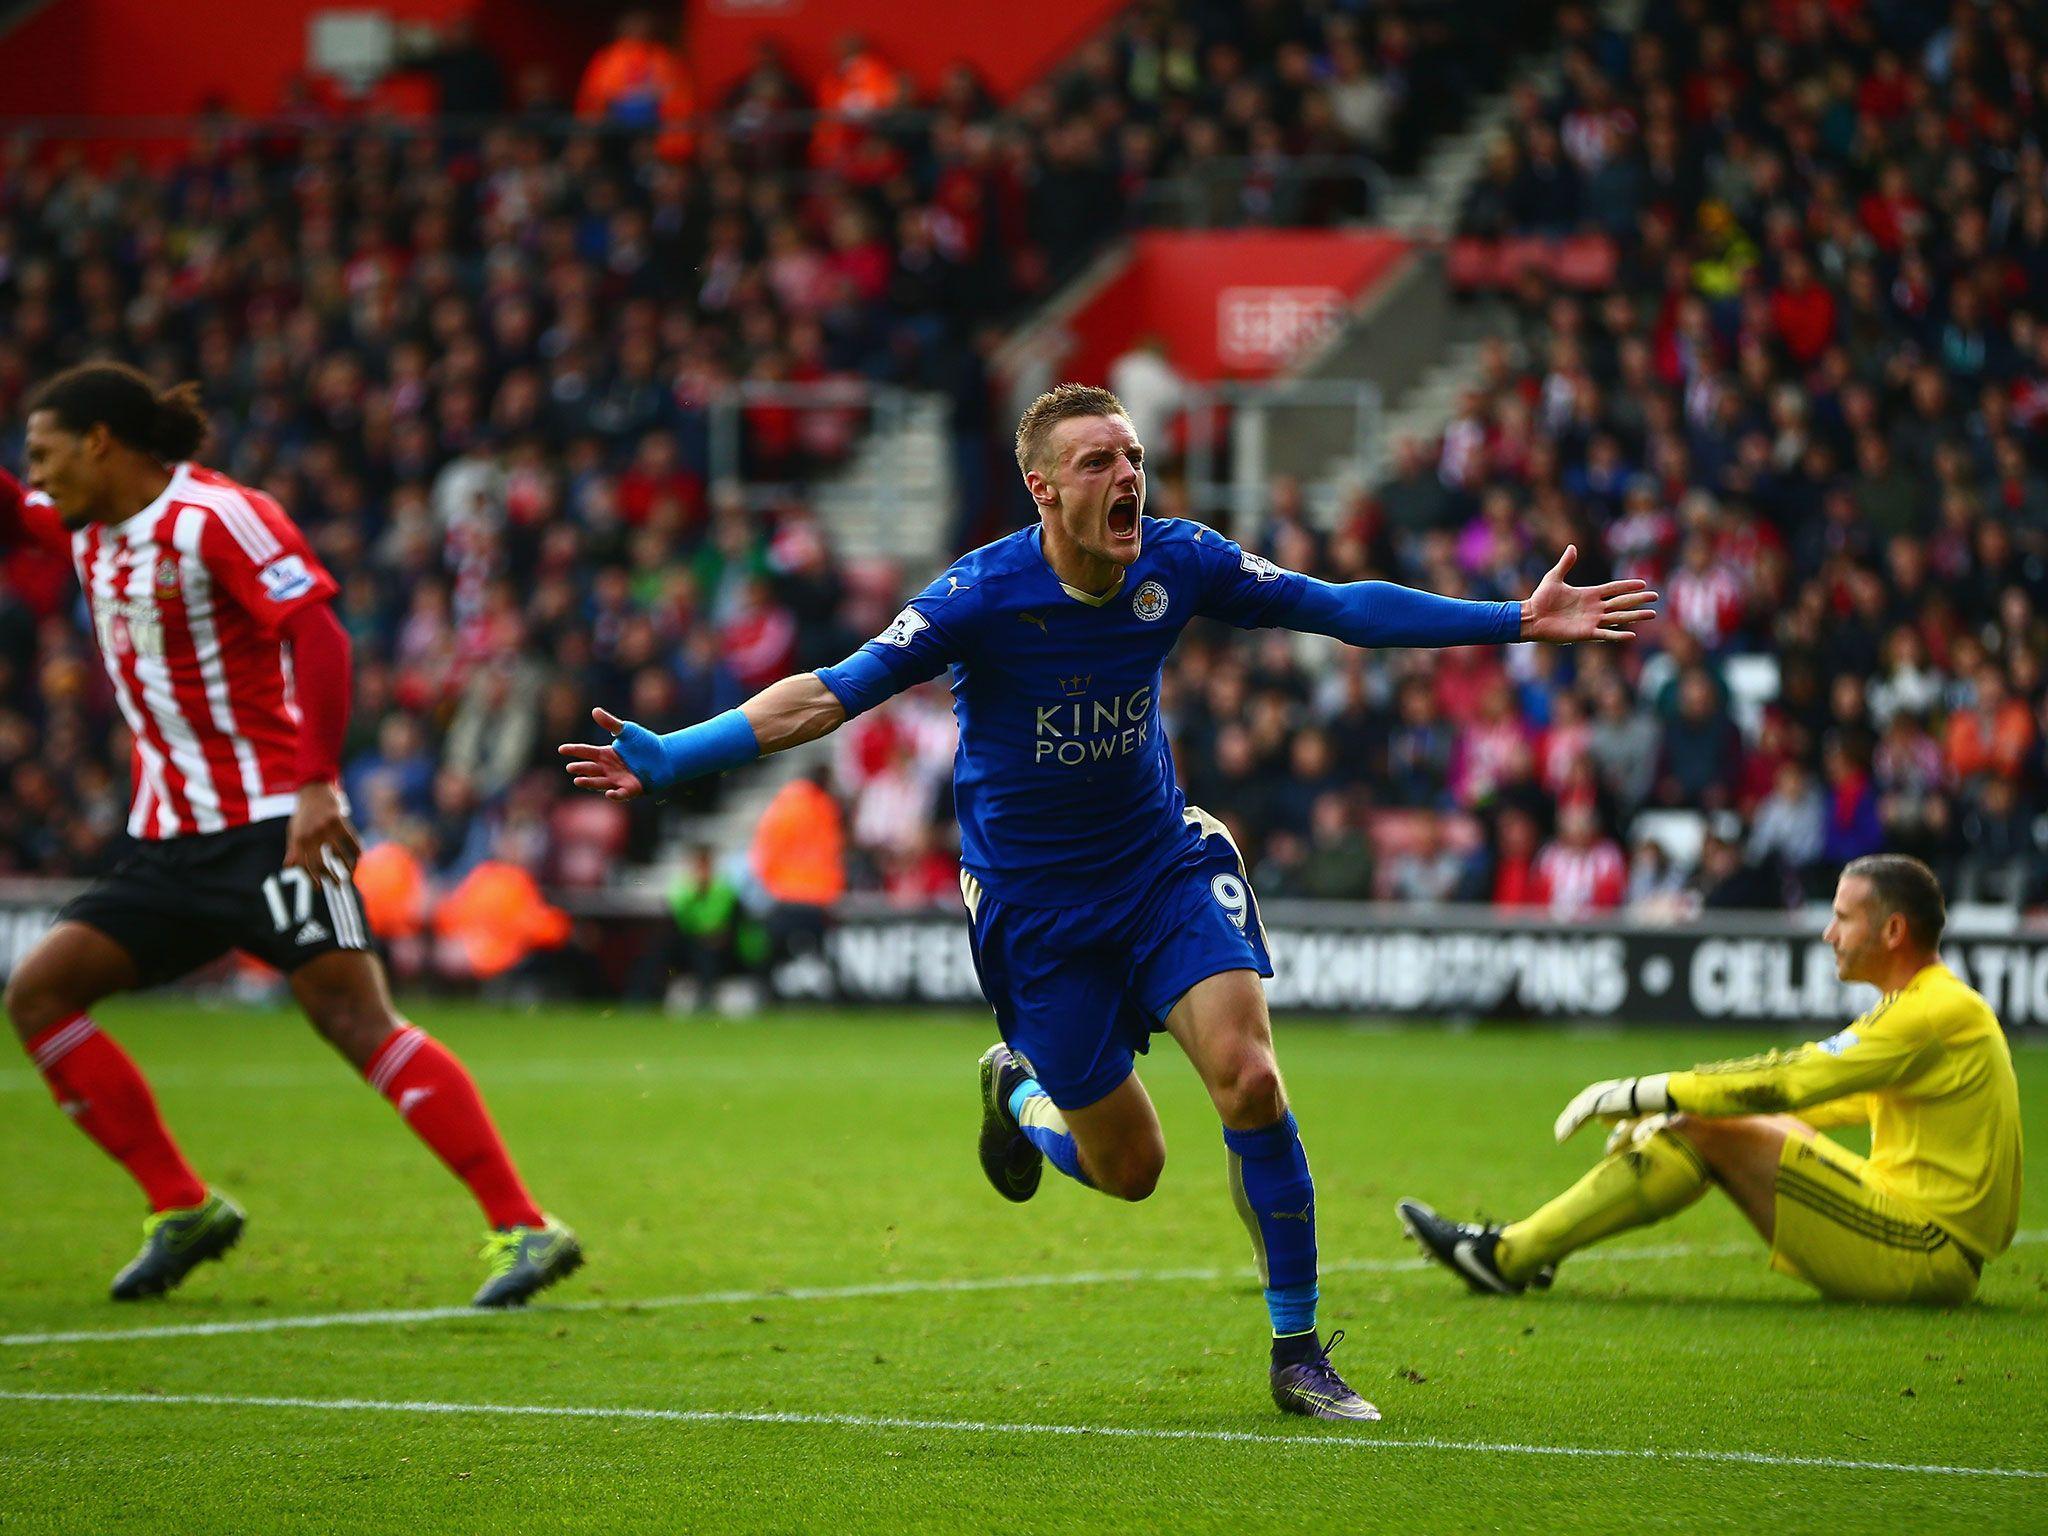 Southampton vs Leicester City match report: Jamie Vardy double